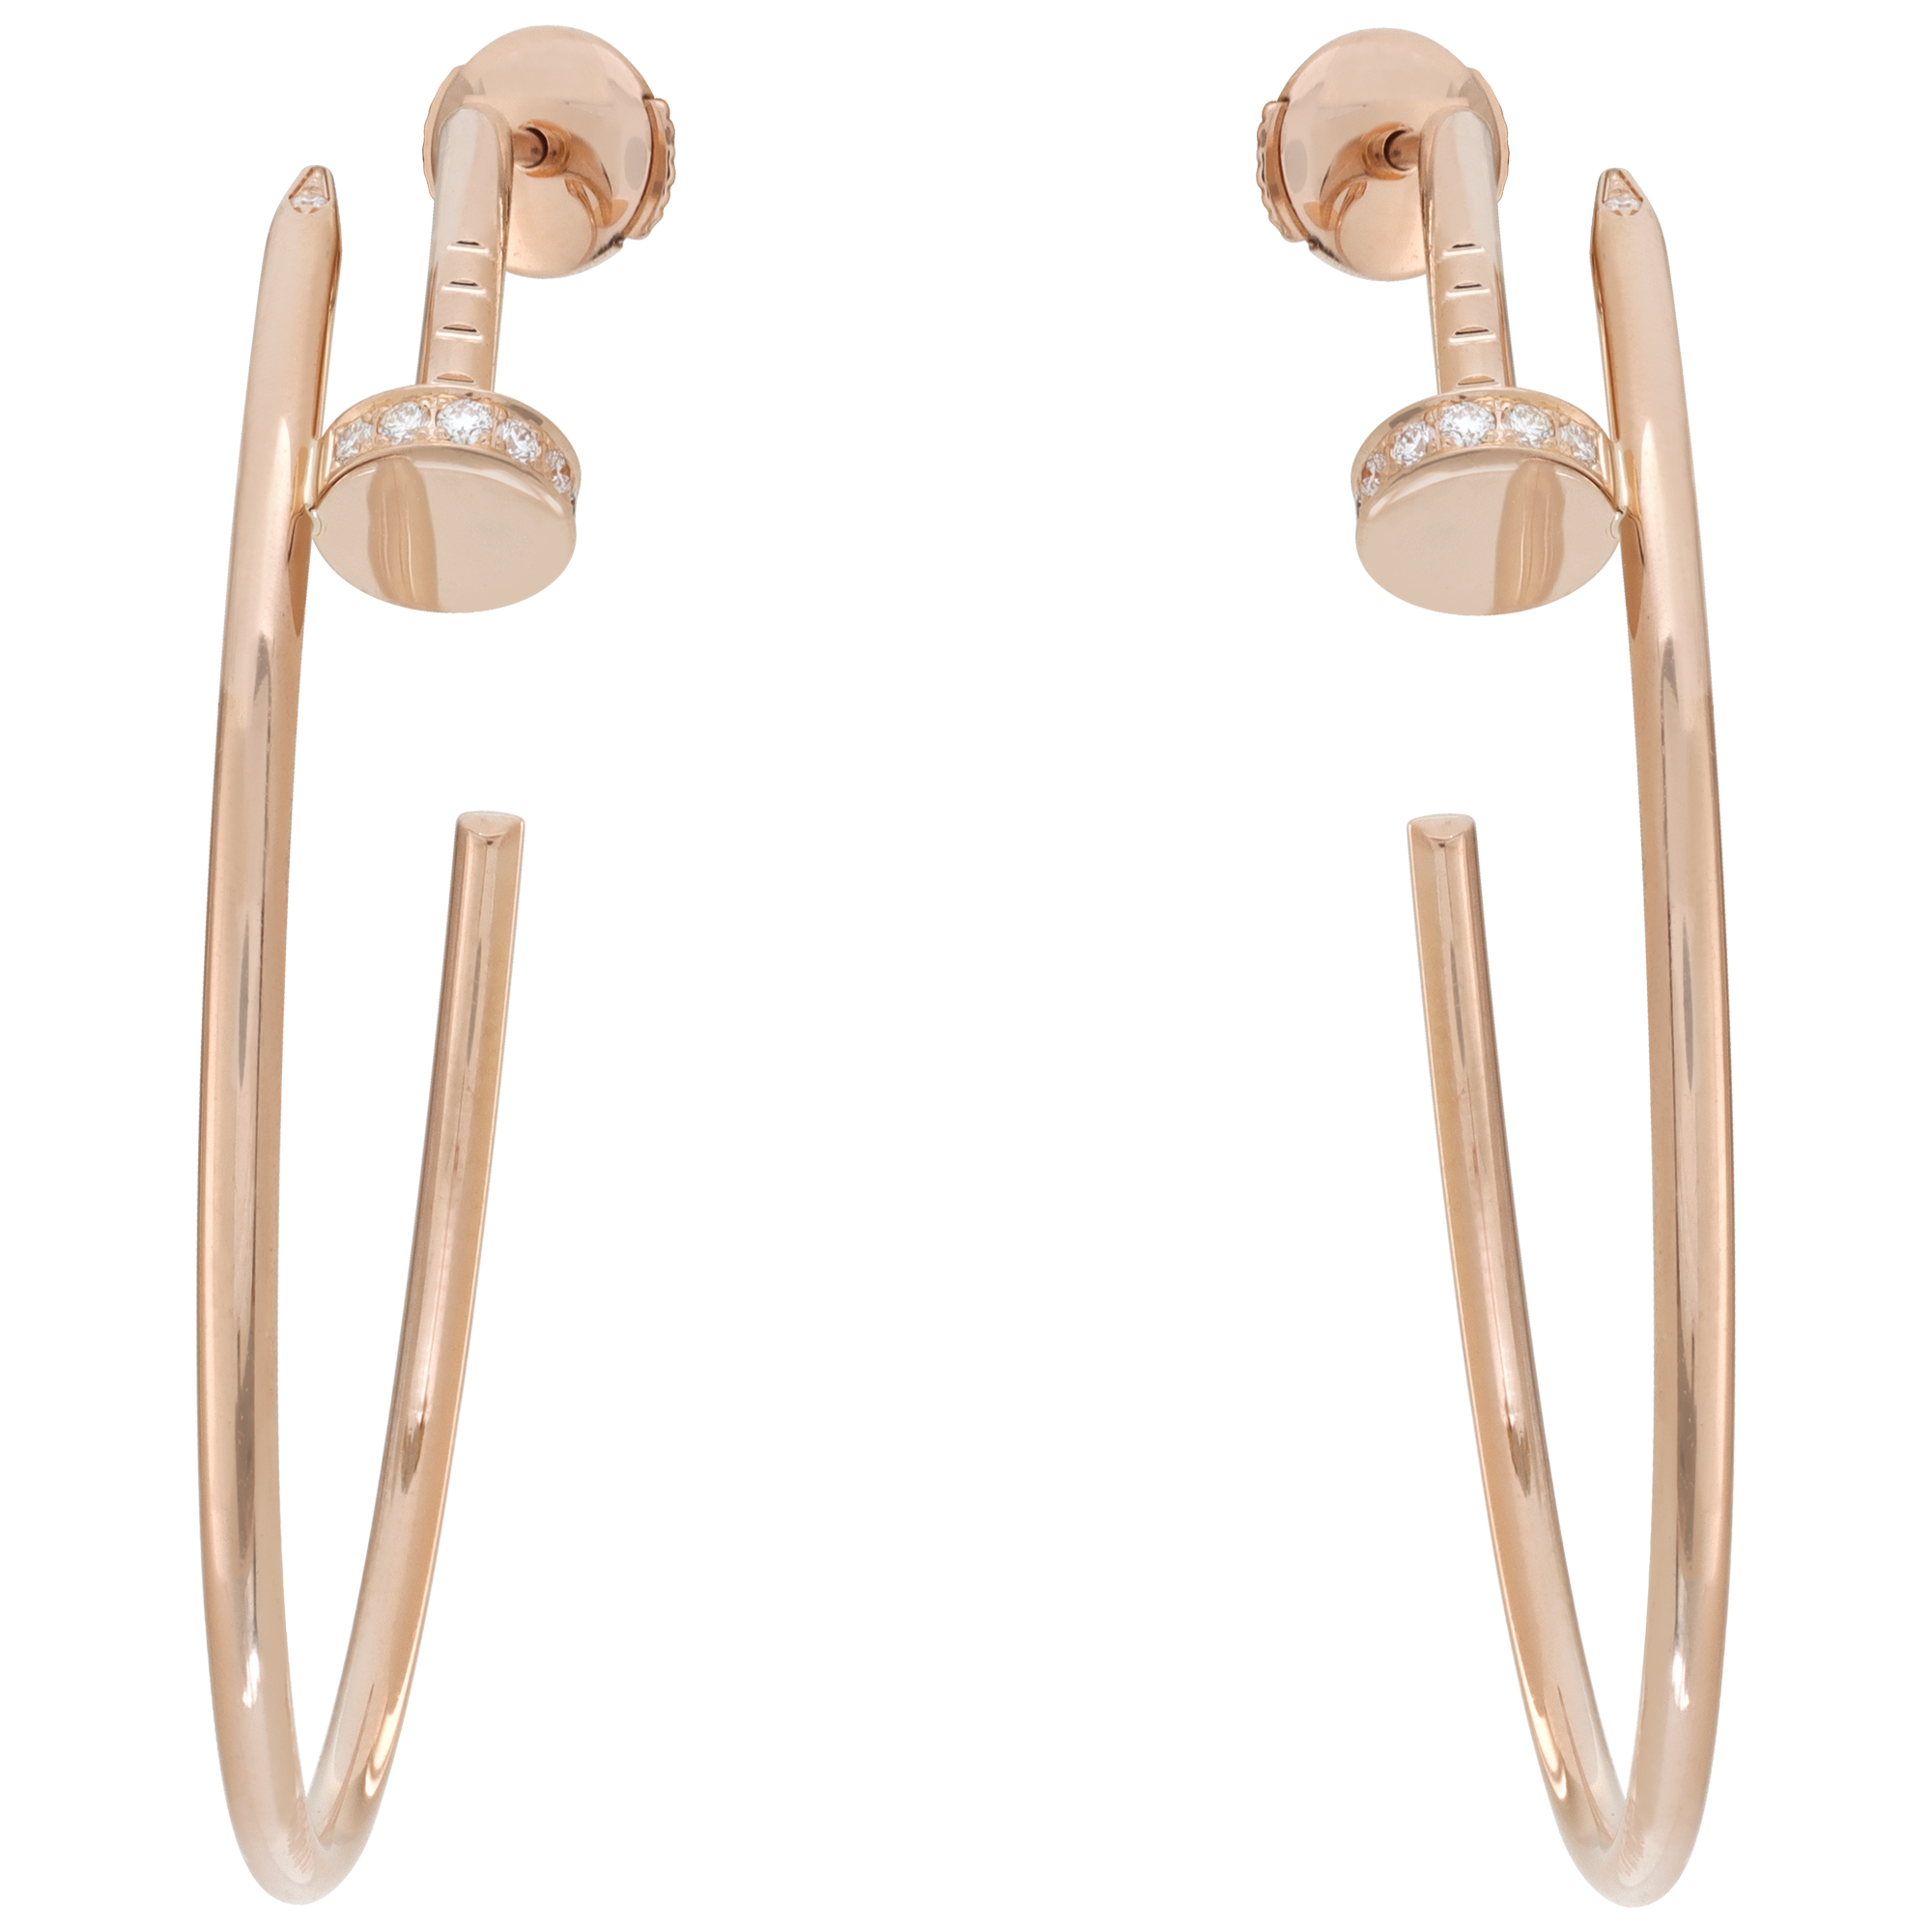 Cartier Juste un Clou earrings in 18k rose gold